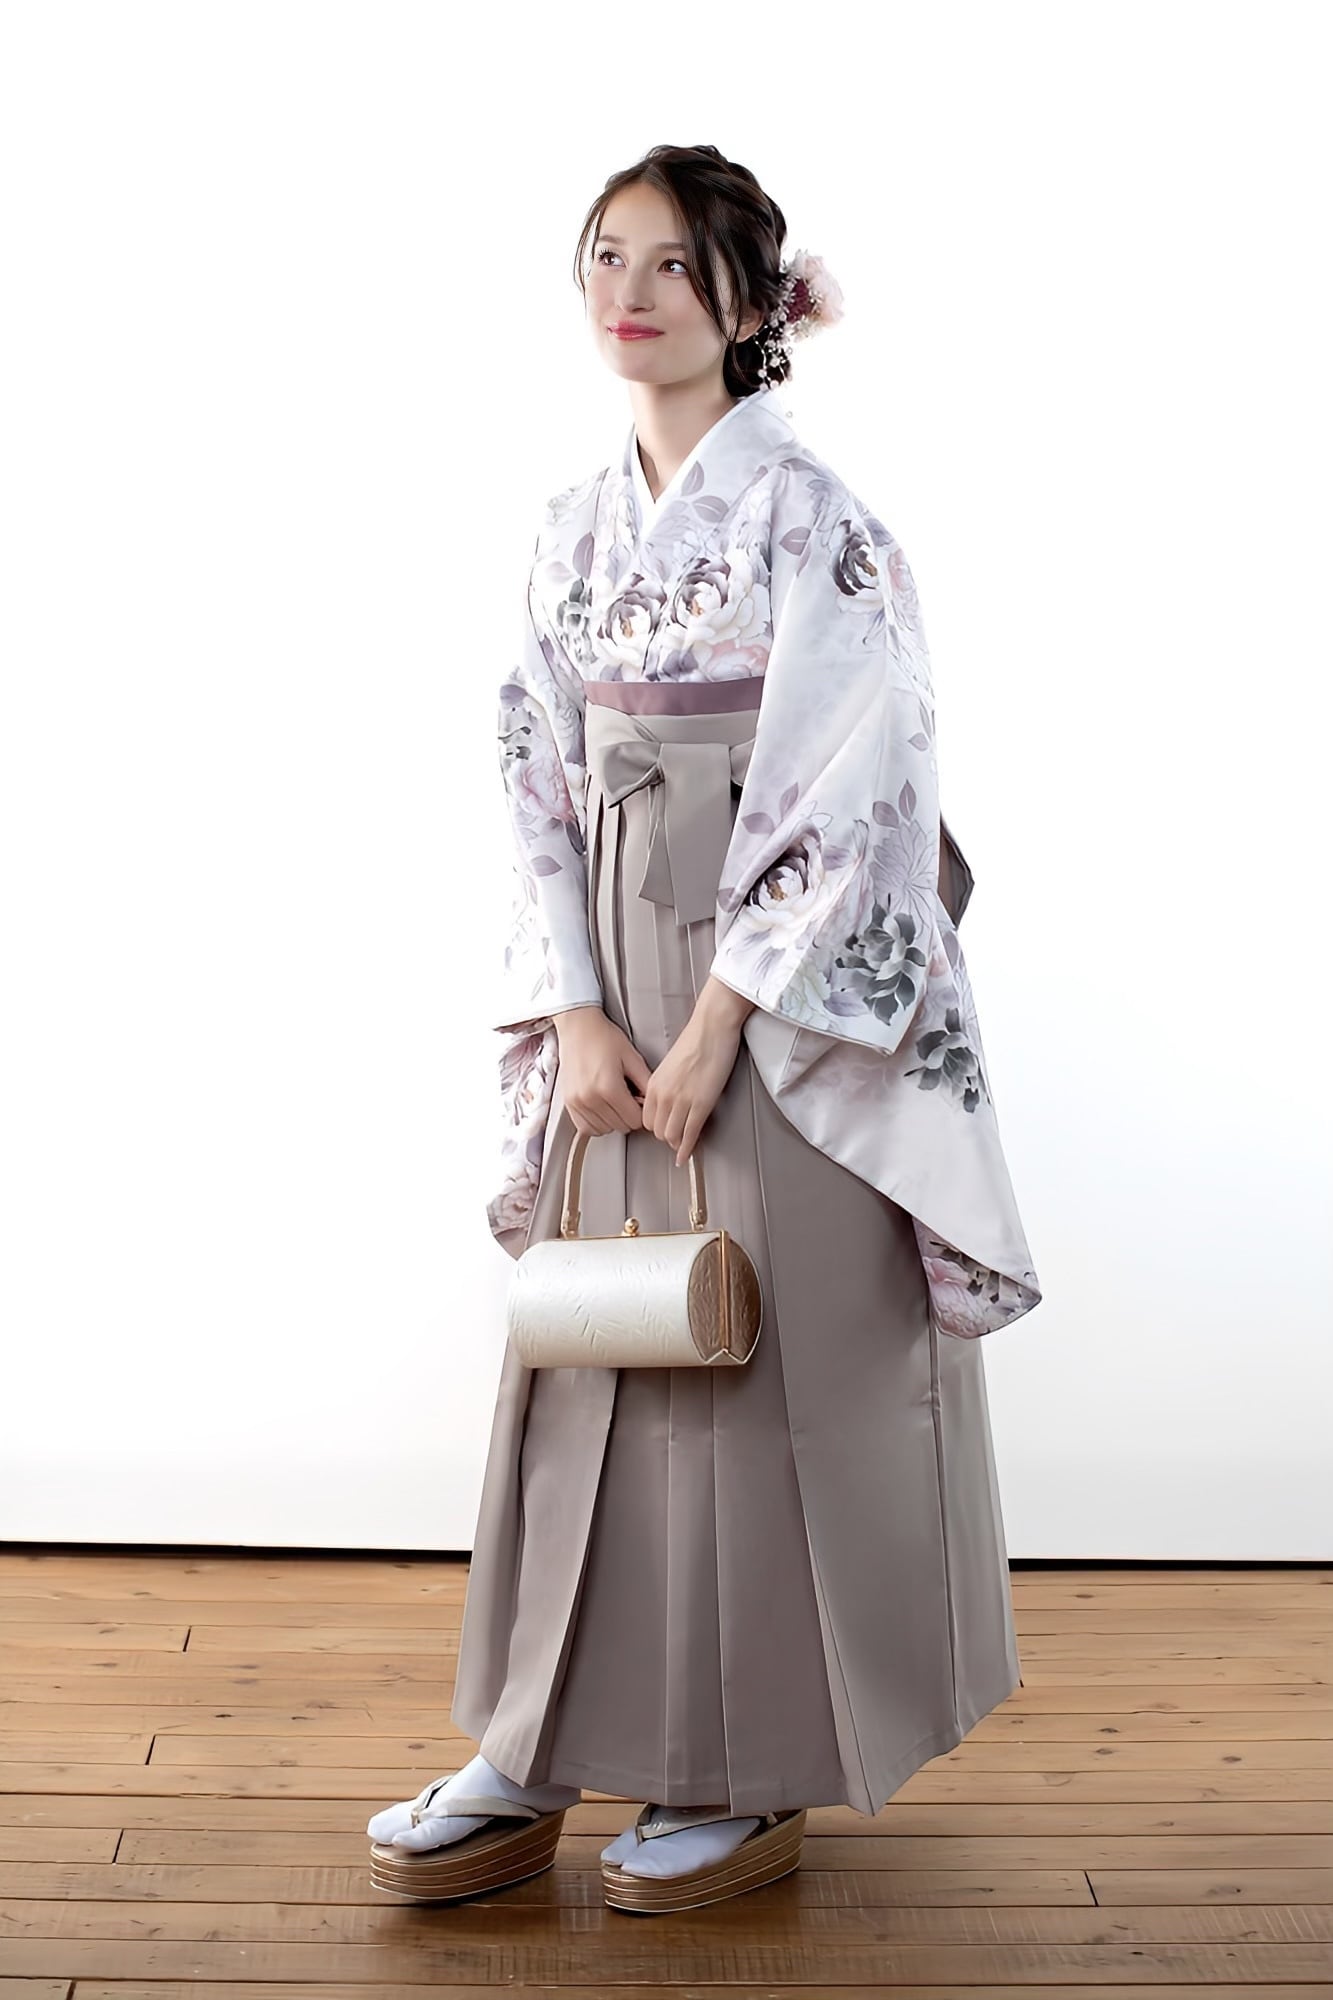 Kimono Sienne 卒業式袴3点セット ライトベージュ 袴 二尺袖着物 袴 卒業式 | Kimono Sienne